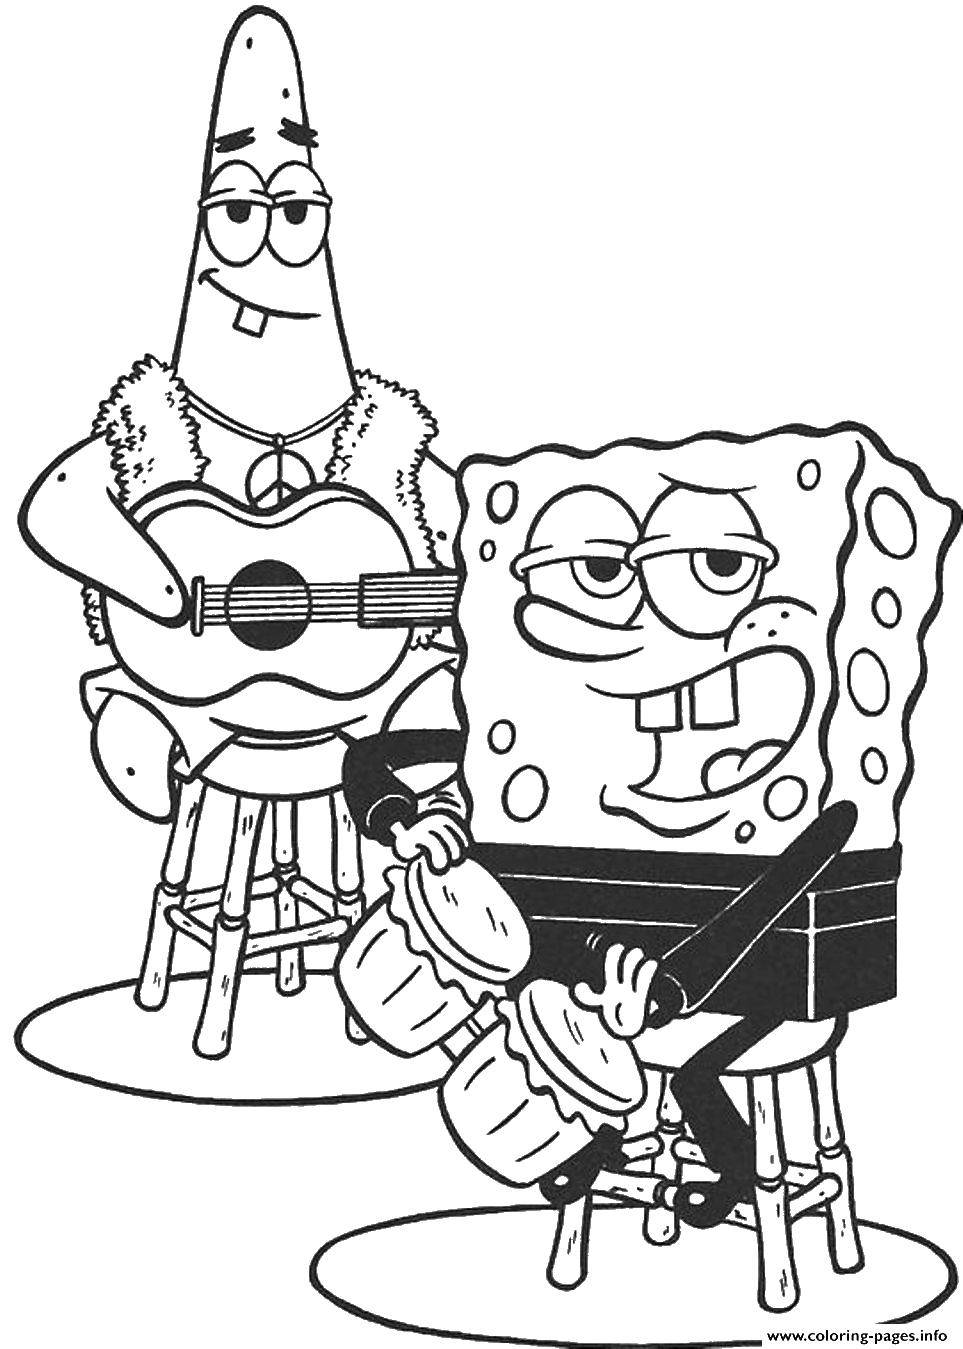 Coloring Spongebob and Patrick playing musical instruments. Category Spongebob. Tags:  the spongebob, Patrick.